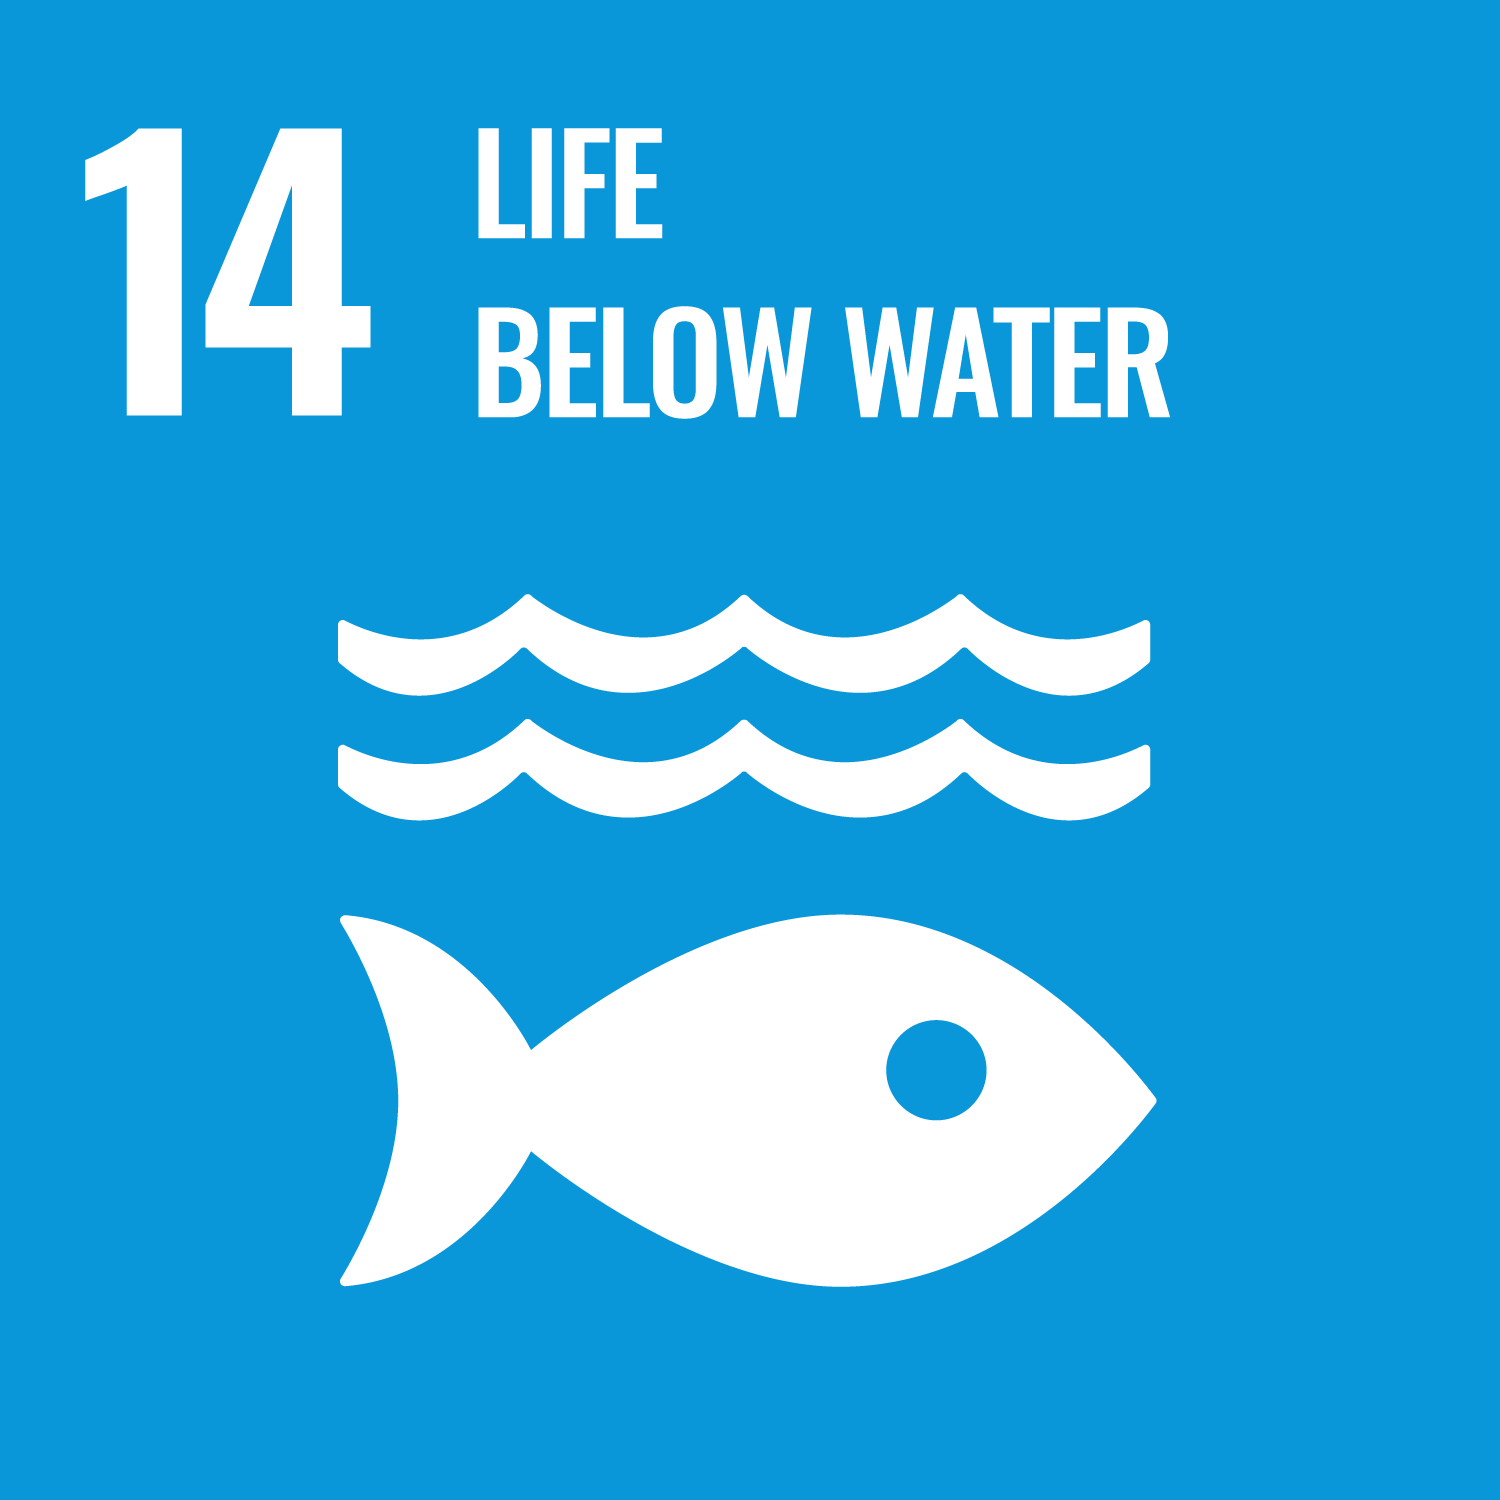 United National Sustainable Development Goal logo for 14